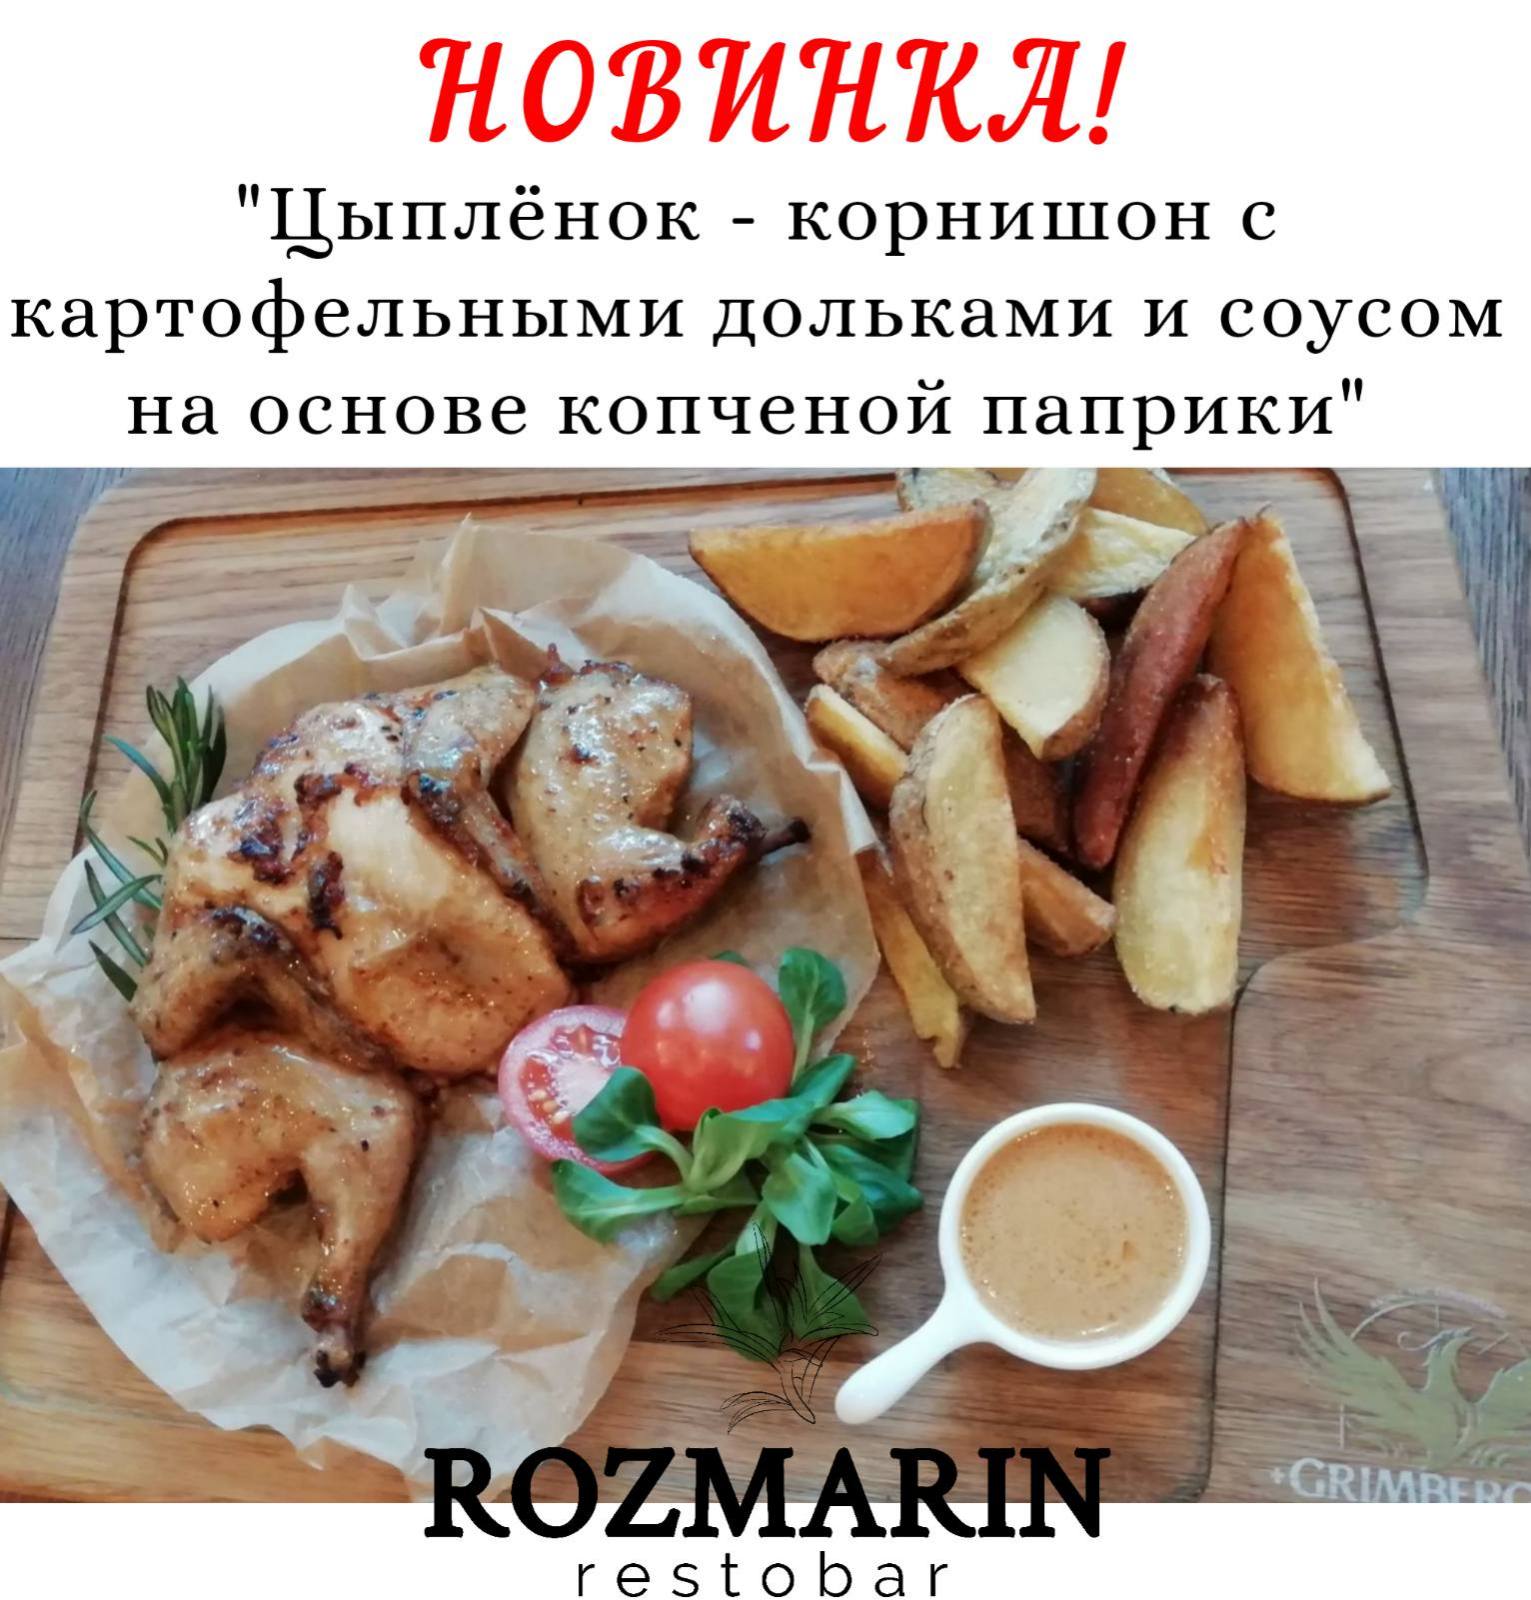 Рестобар Rozmarin